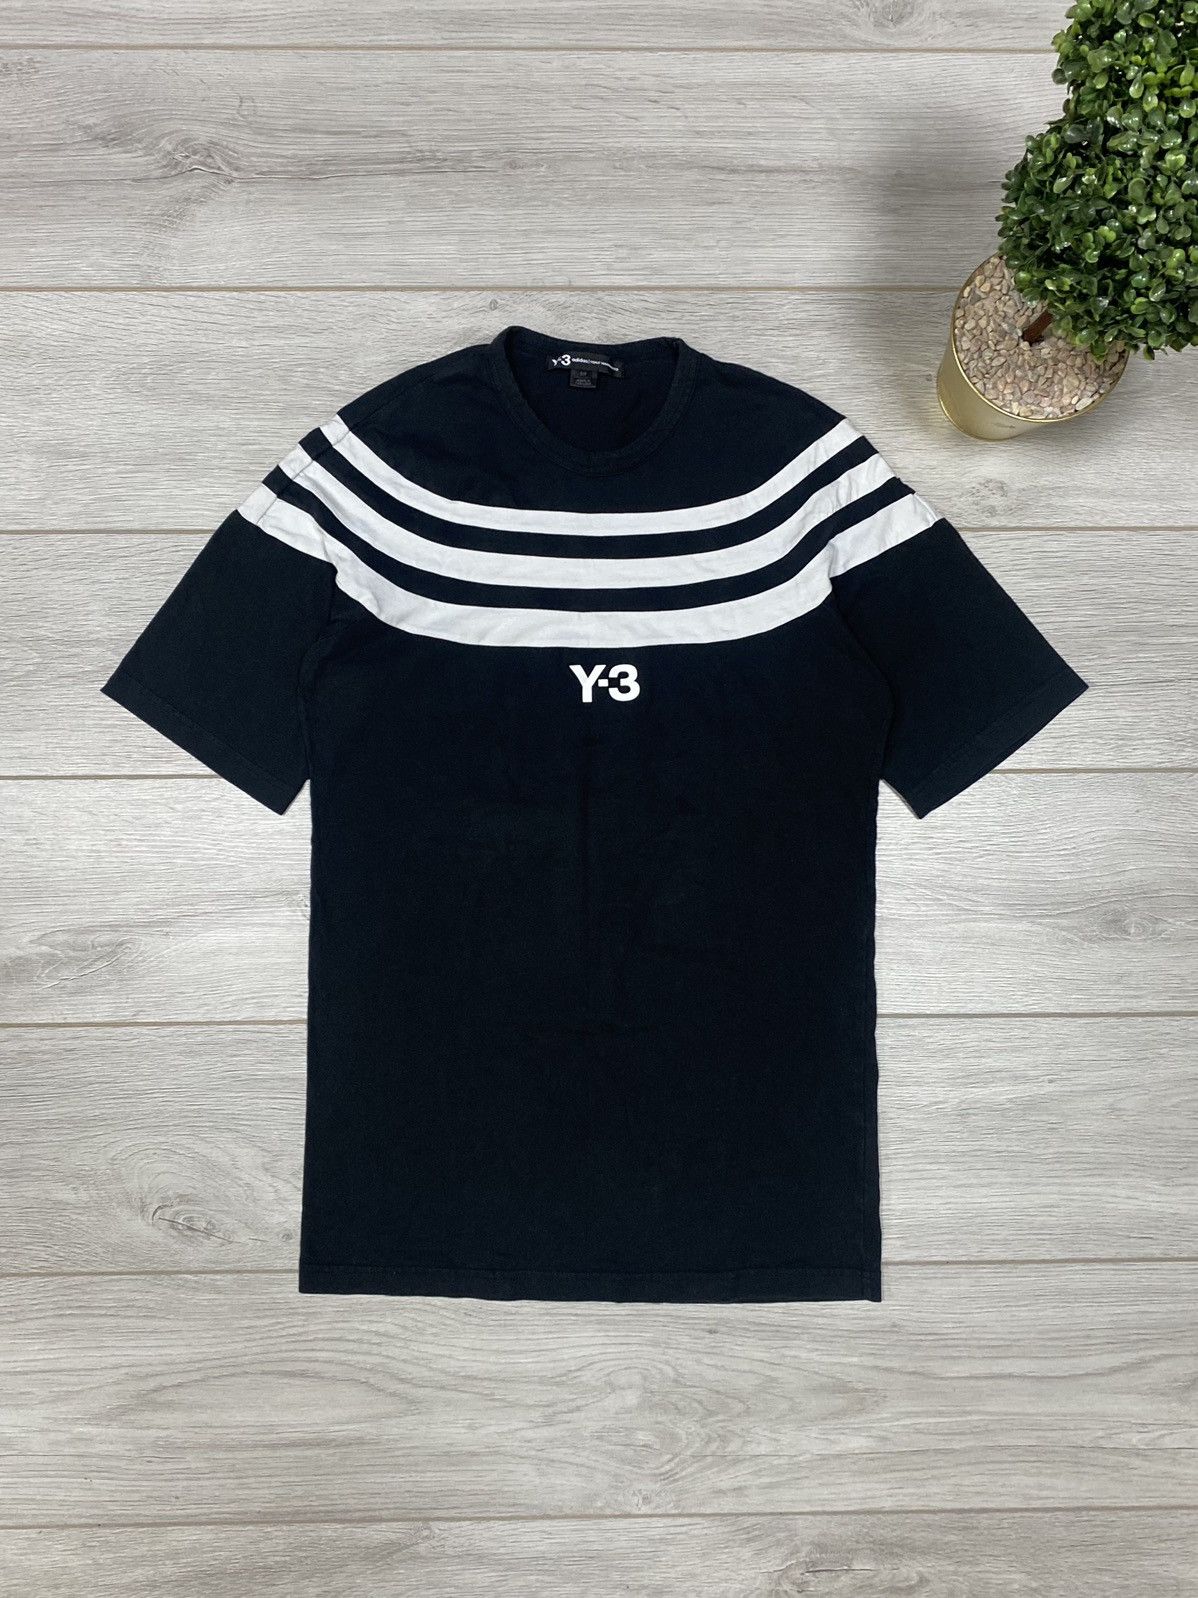 Y-3 Y-3 Yohji Yamamoto x Adidas long t-shirt around stripes | Grailed